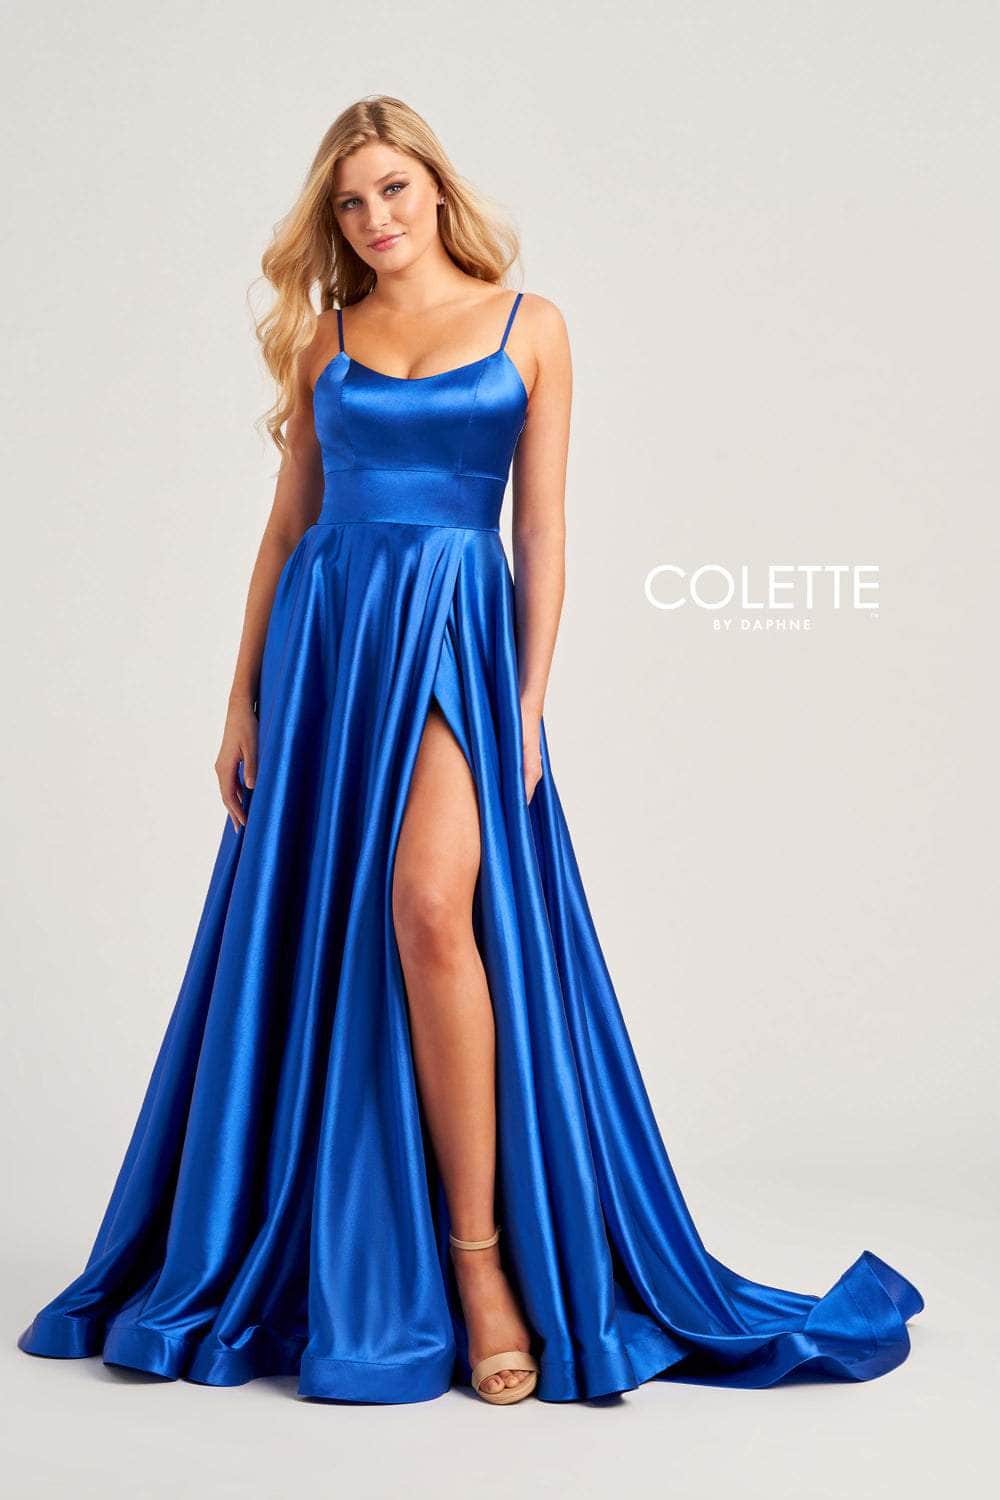 Colette By Daphne CL5283 - Scoop Neck A-Line Prom Dress